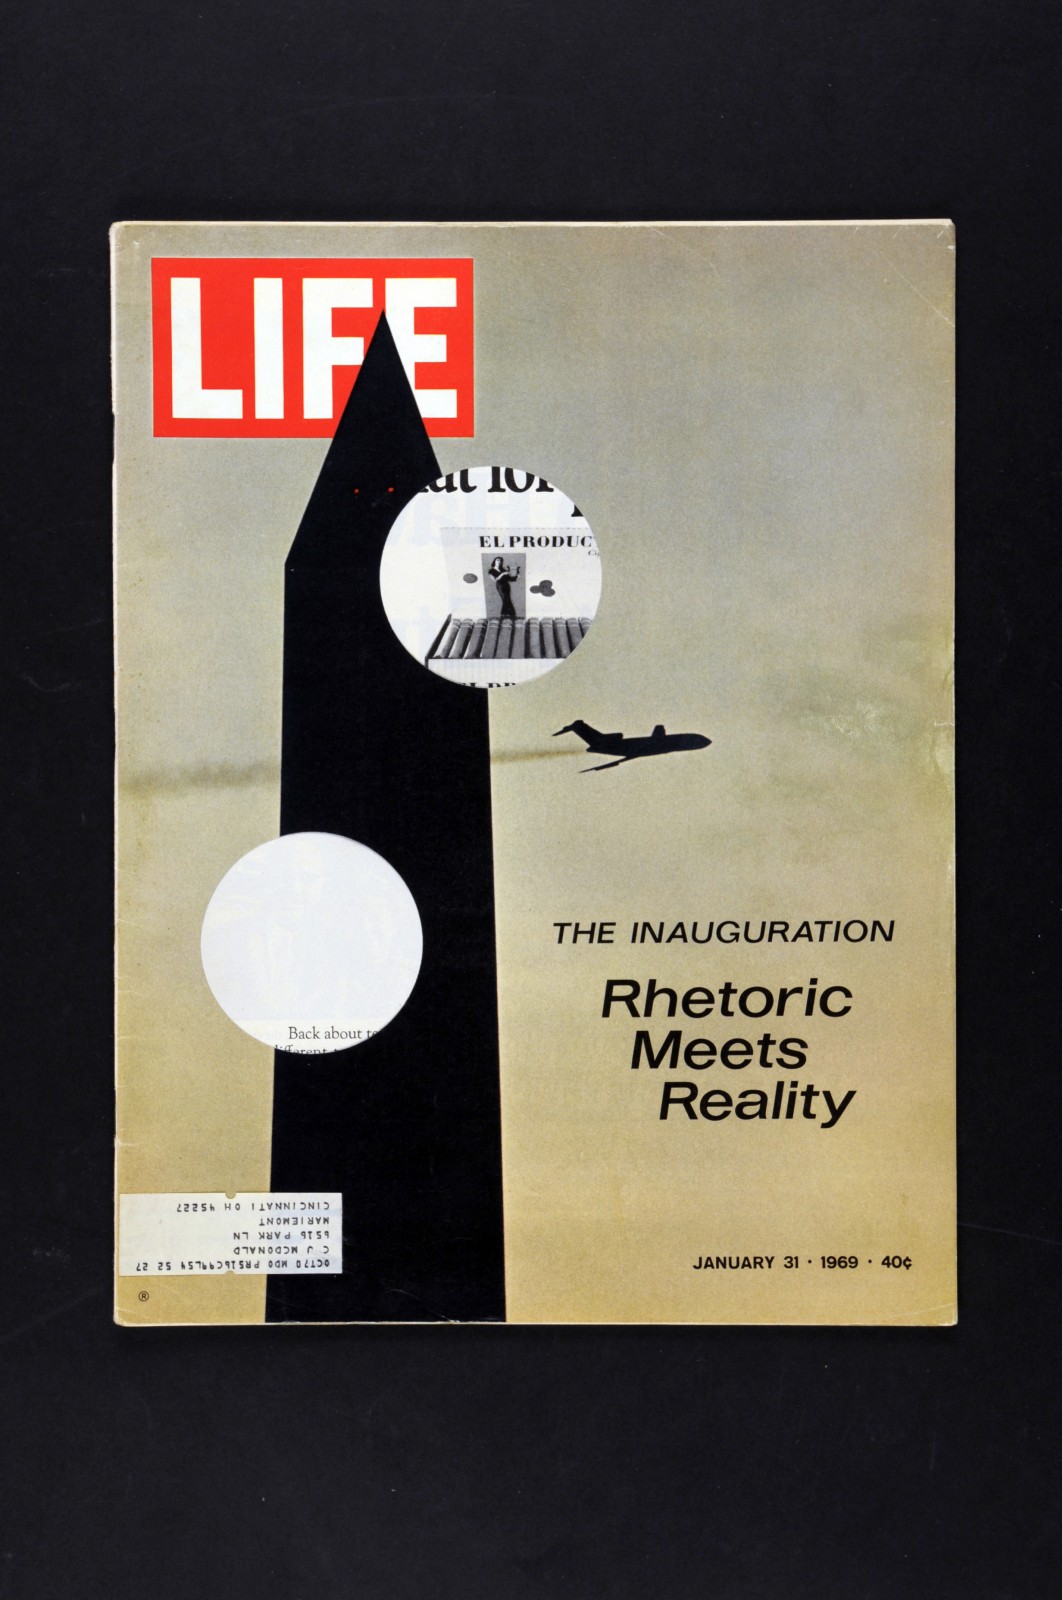 LA COLLECTION expo read into my black holes LIFE january 31 - 1969